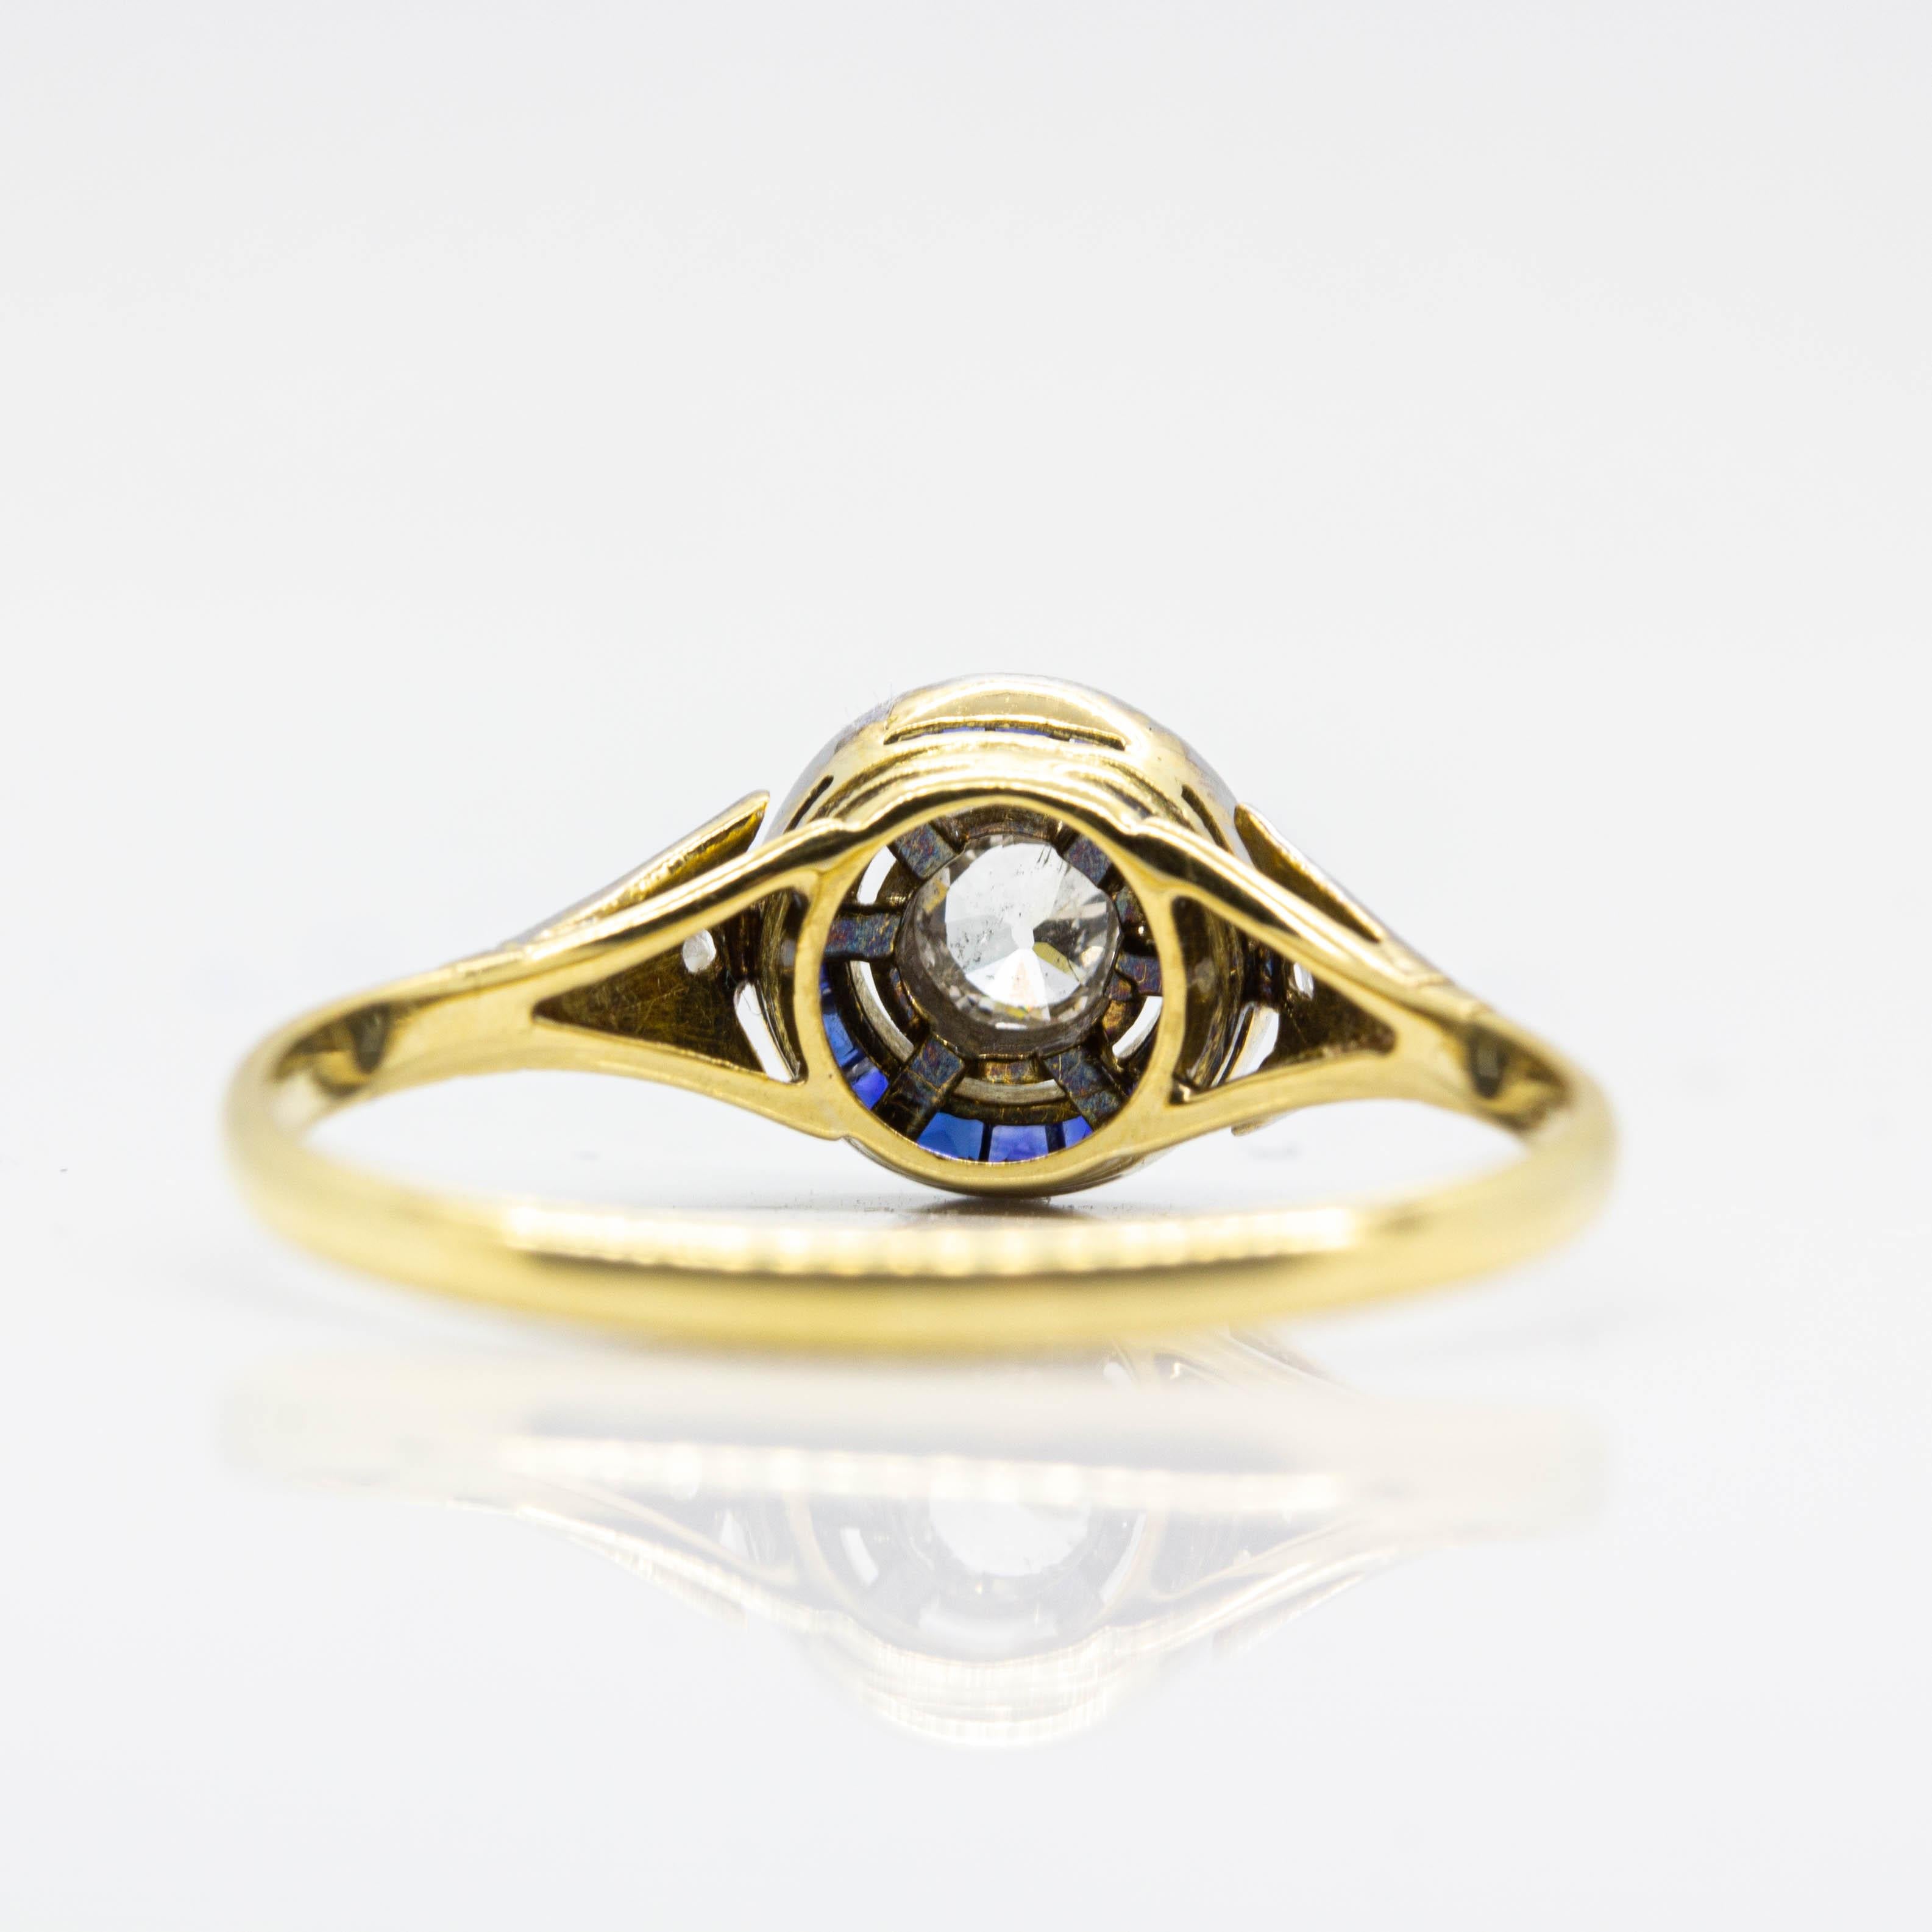 Old Mine Cut Art Deco 18 Karat Gold and Platinum Diamond and Sapphires Ring